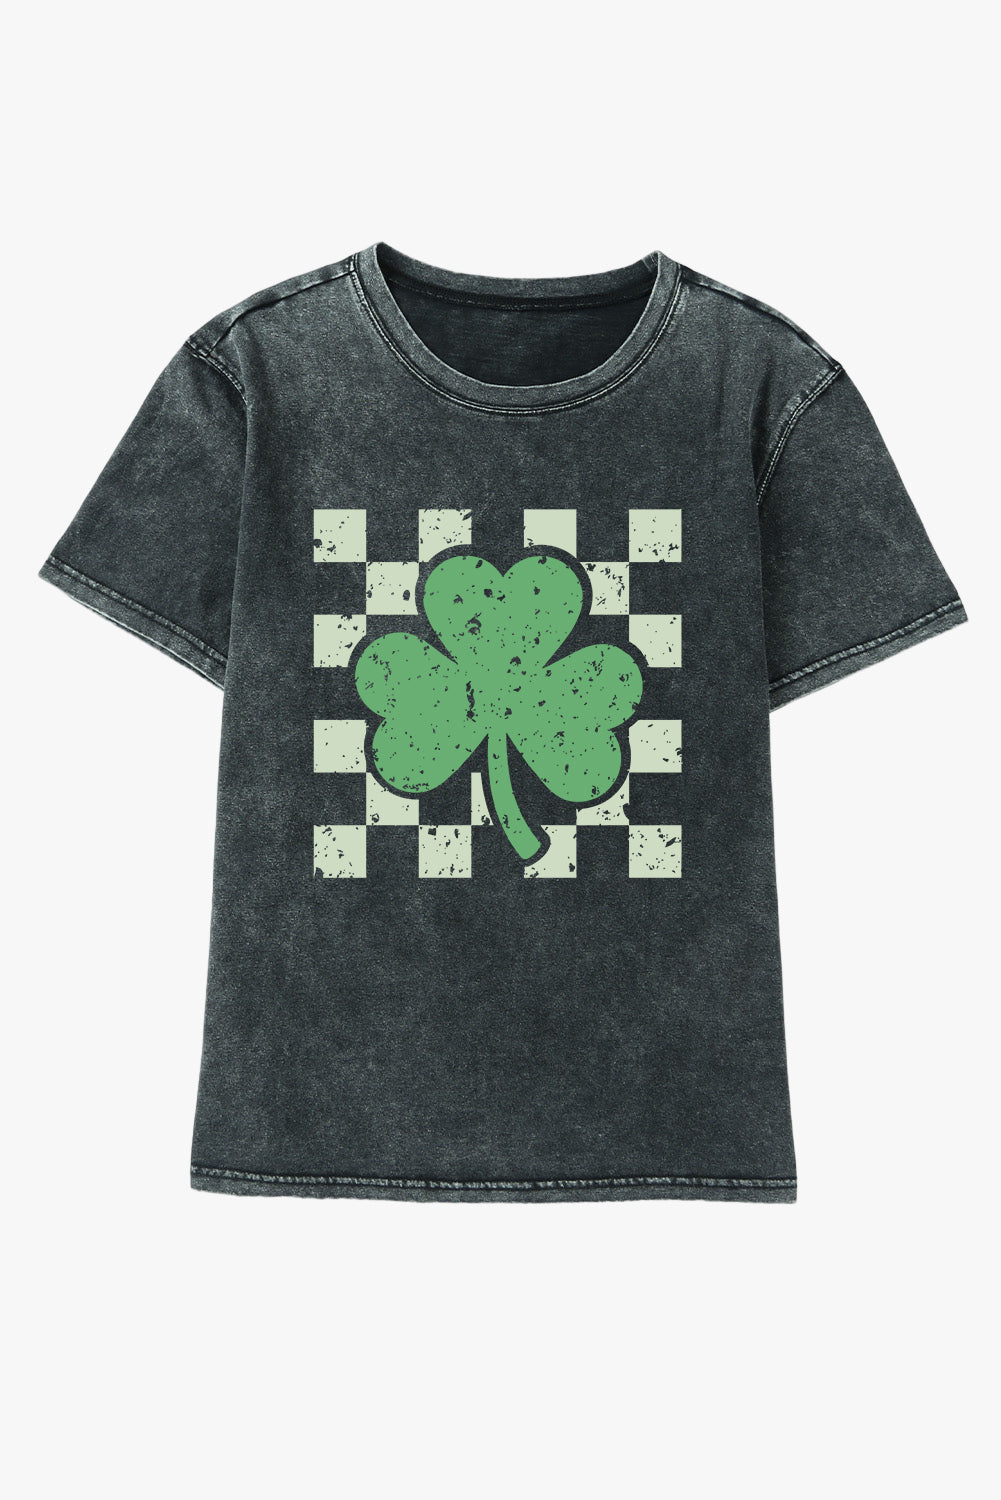 Black Clover Checkered Print Mineral Wash Crewneck T Shirt Graphic Tees JT's Designer Fashion